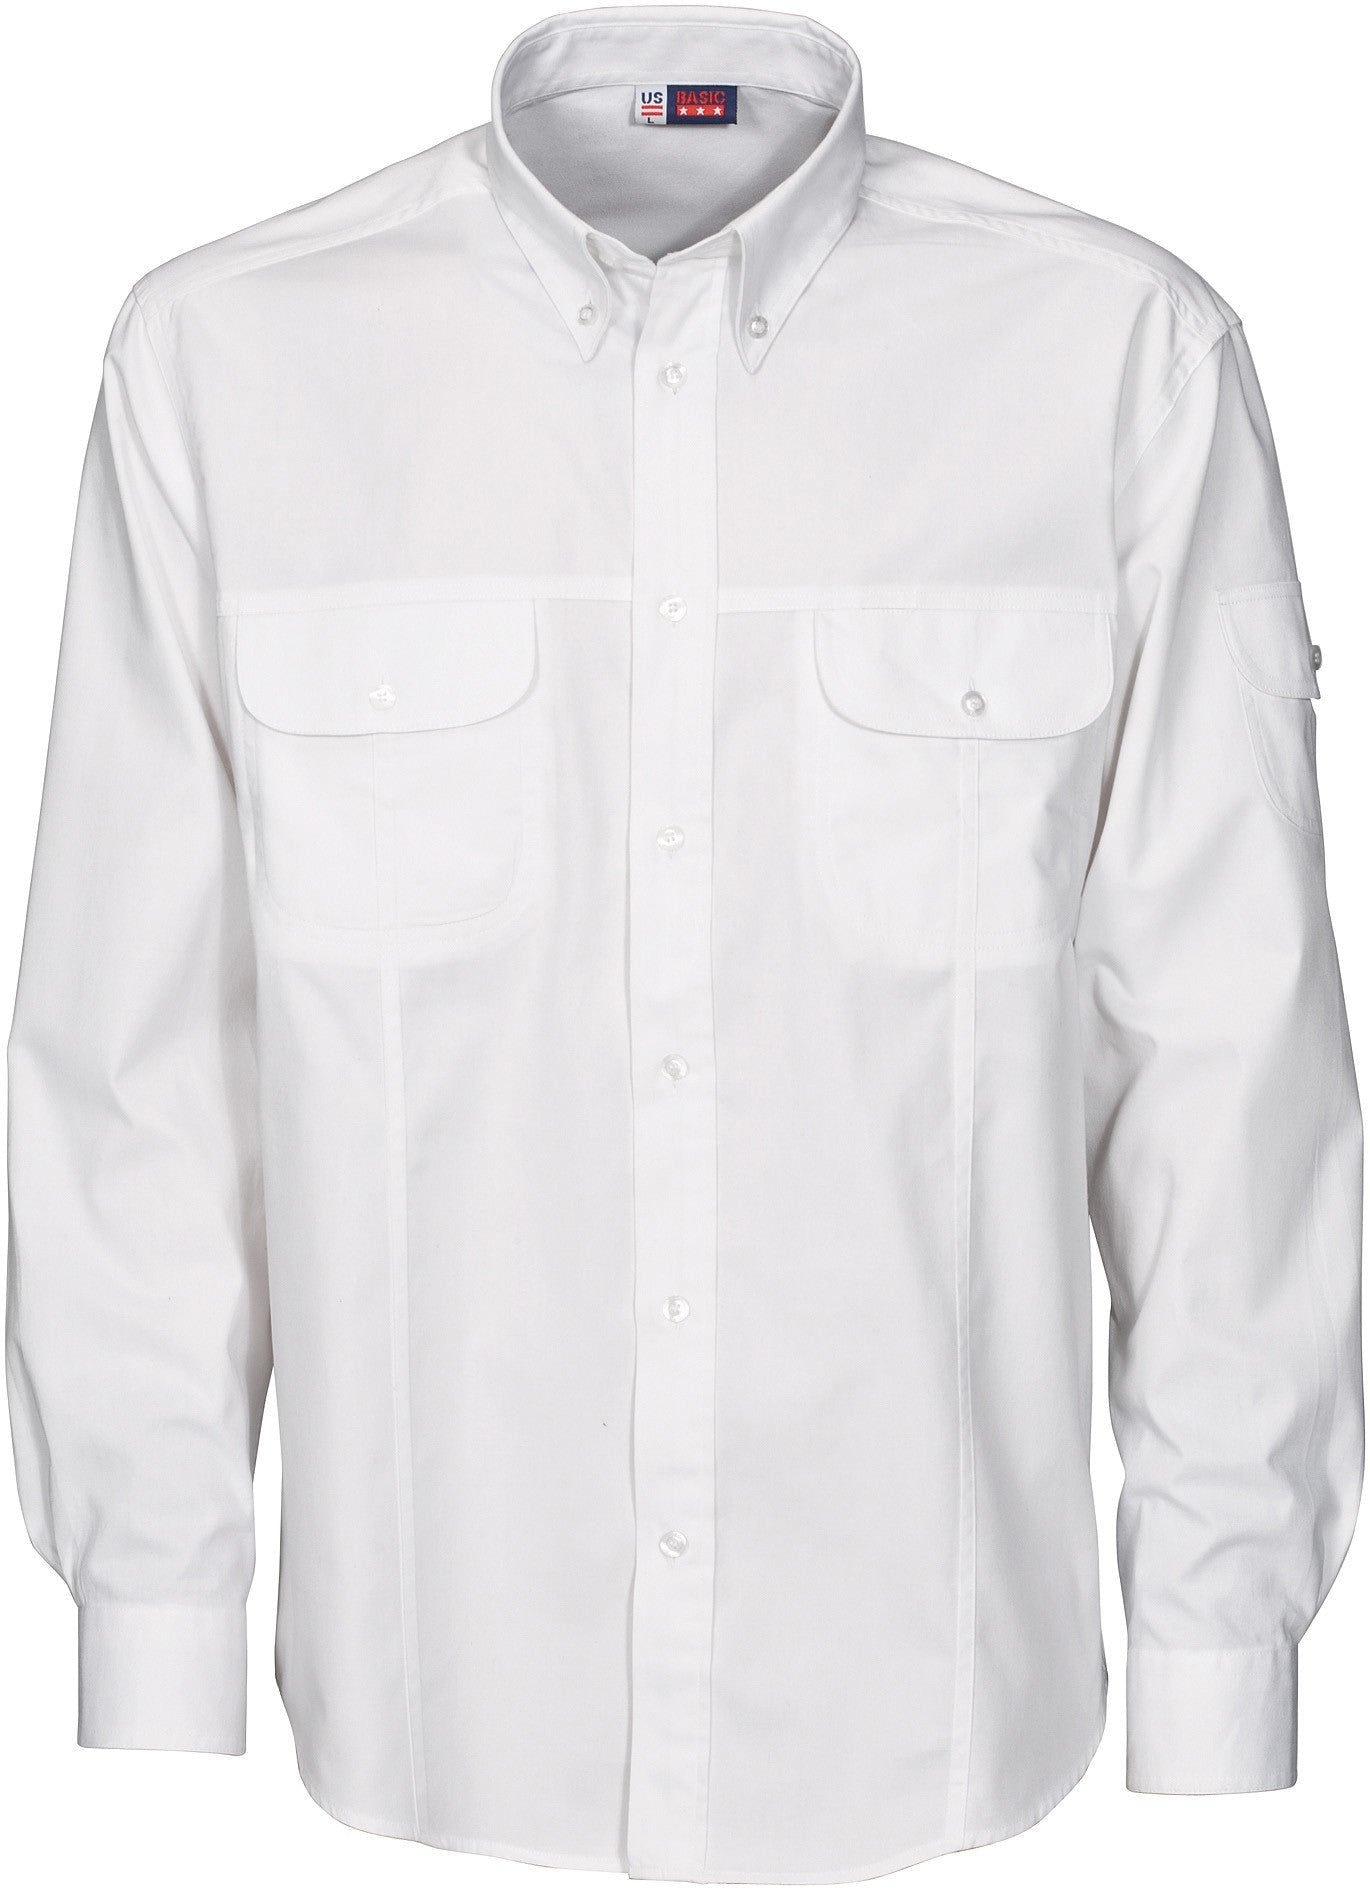 Mens Long Sleeve Phoenix Shirt - White Only-2XL-White-W